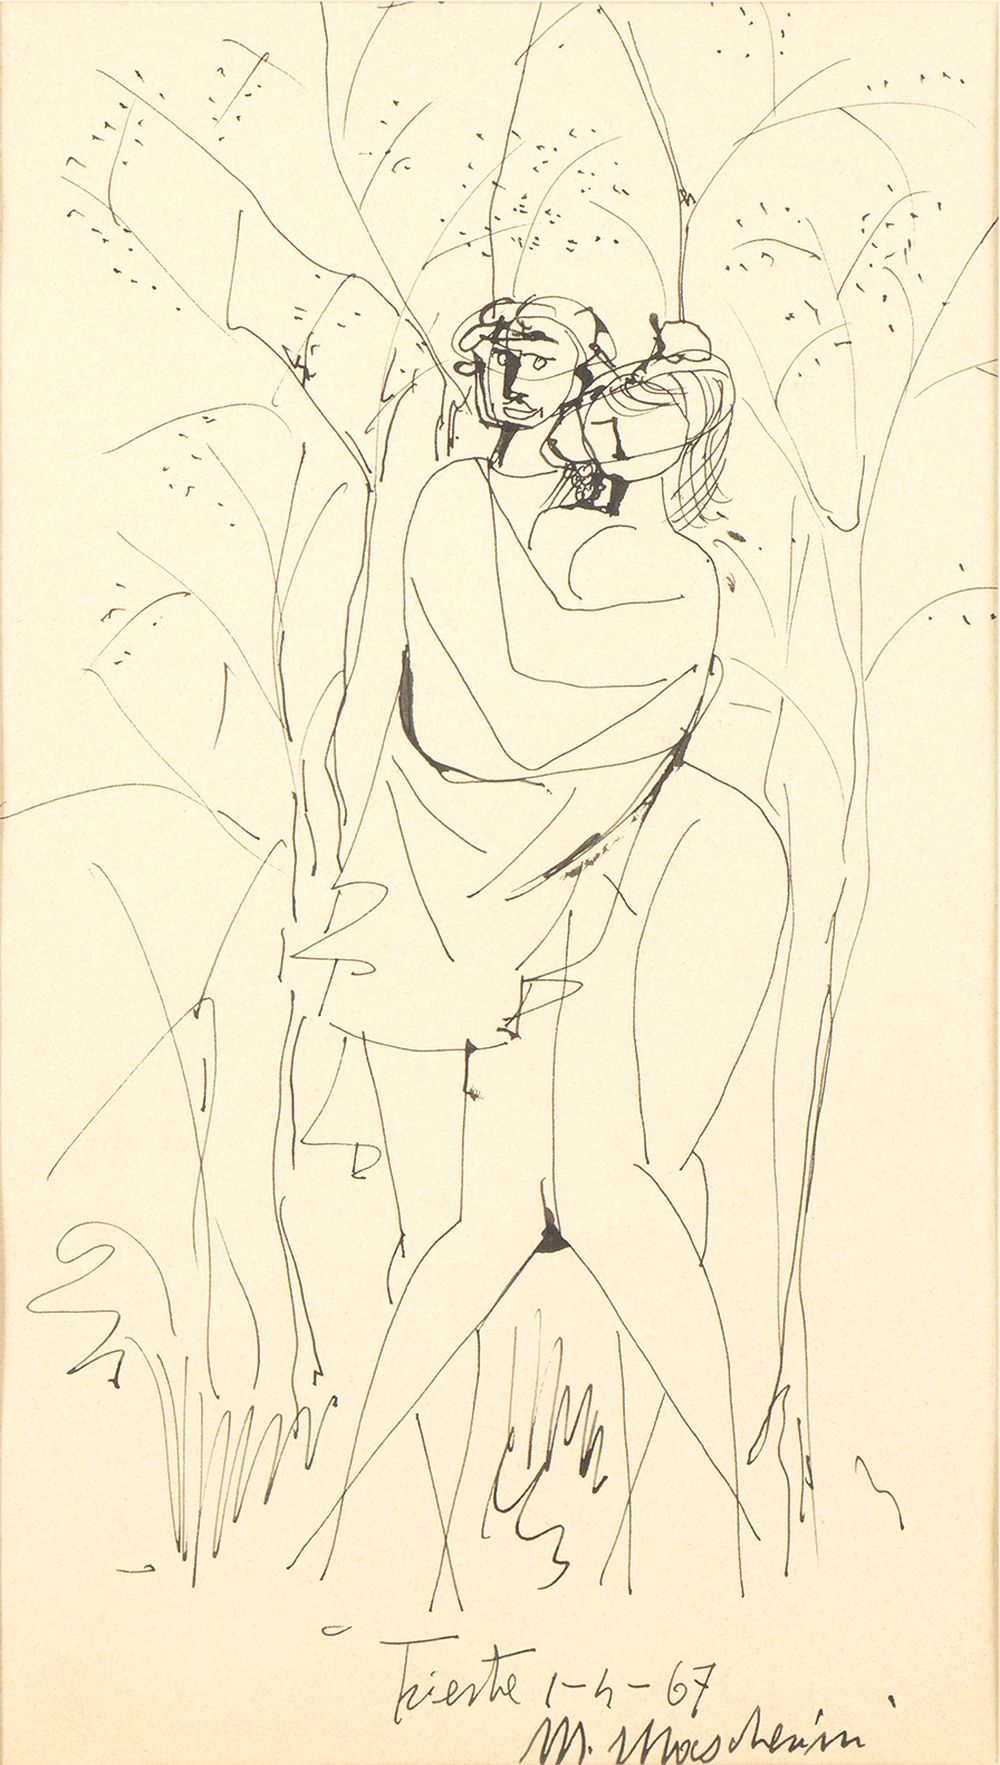 MARCELLO MASCHERINI (Udine, 1906 - Padova, 1983): Adam and Eve, 1967